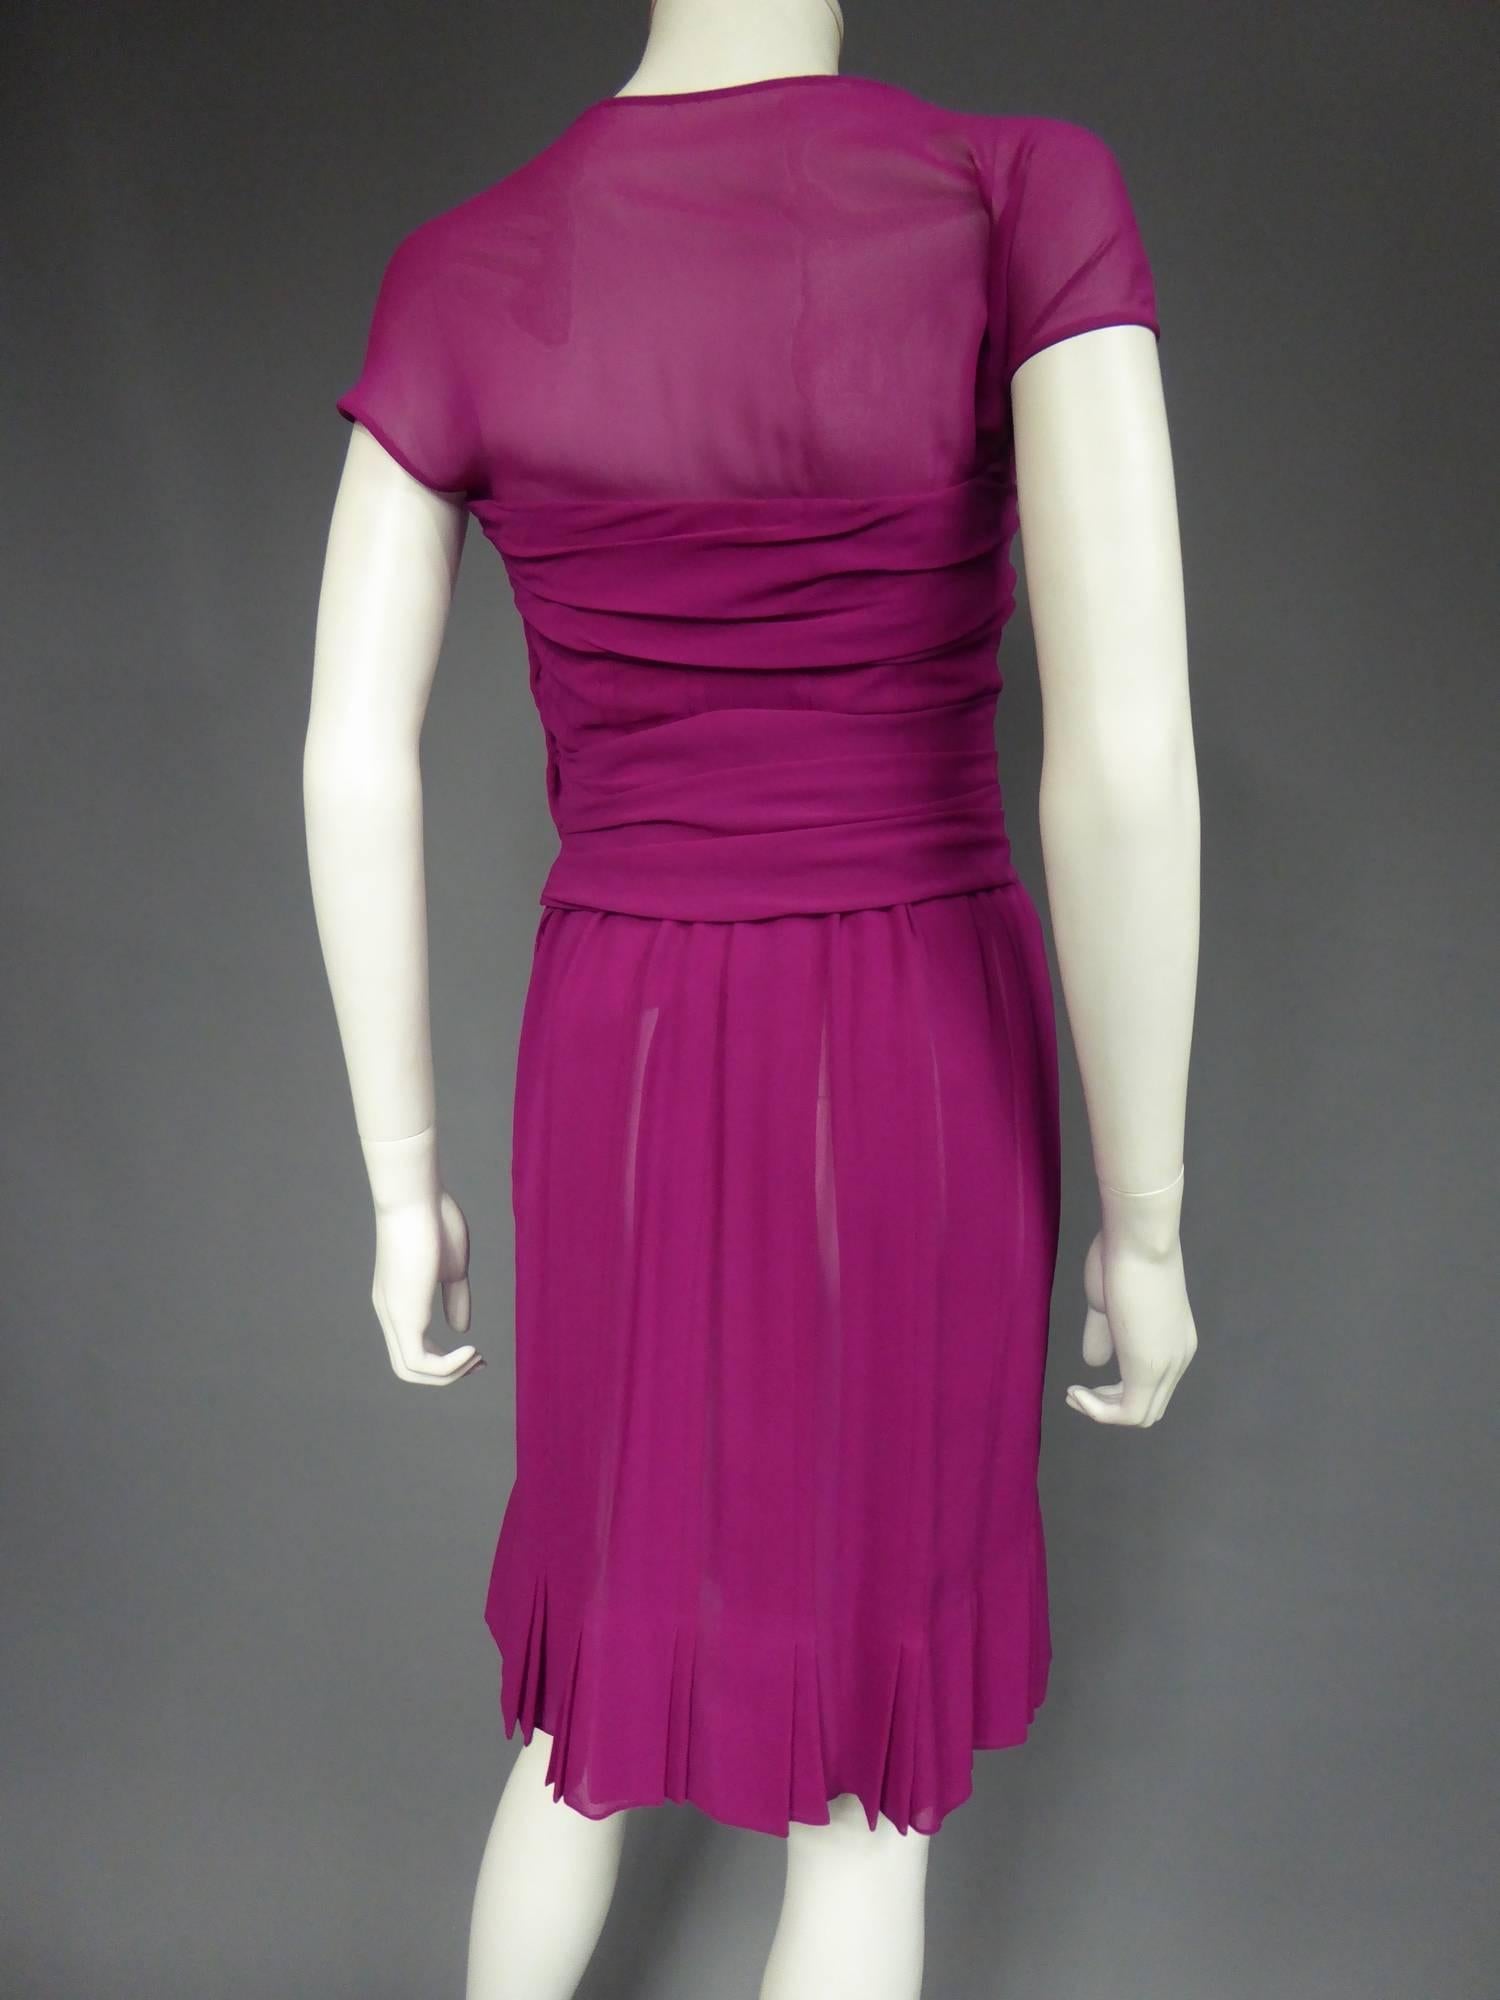 Women's A Christian Dior/Gianfranco Ferré Couture Pink Chiffon Dress  Circa 1990 For Sale